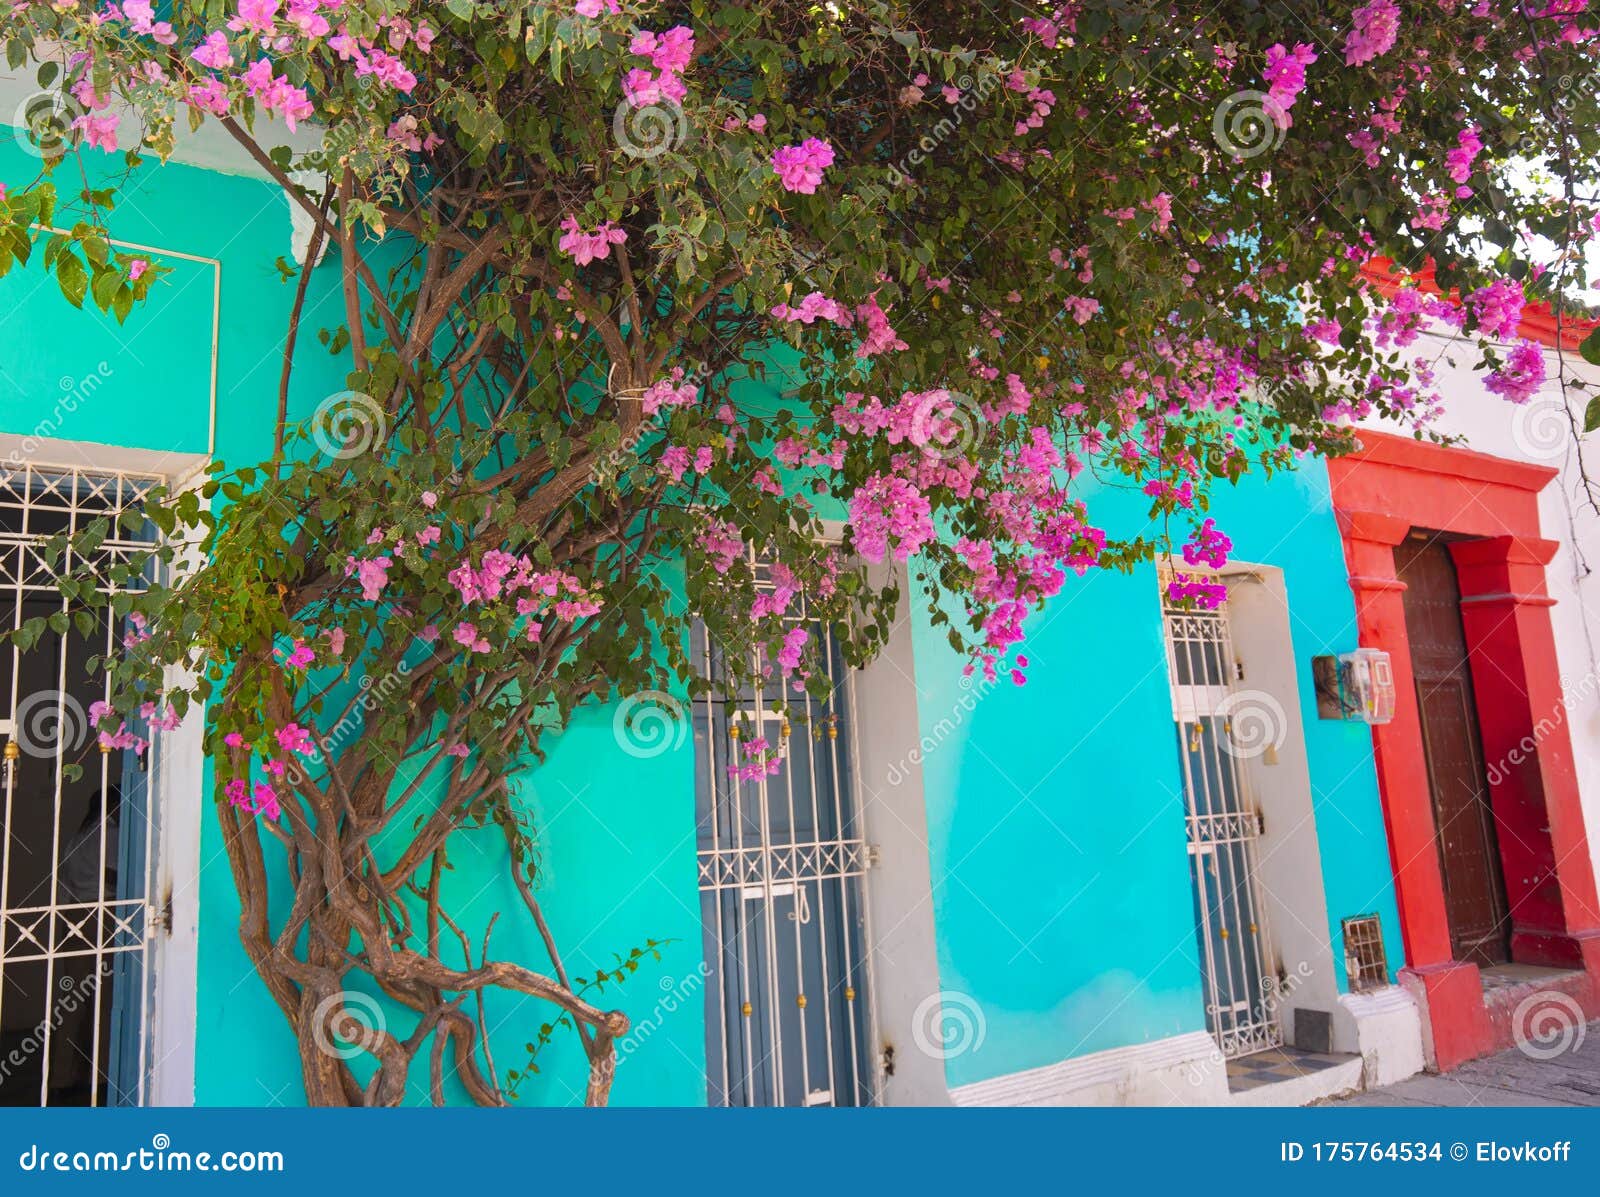 colombia, scenic colorful streets of cartagena in historic getsemani district near walled city ciudad amurallada